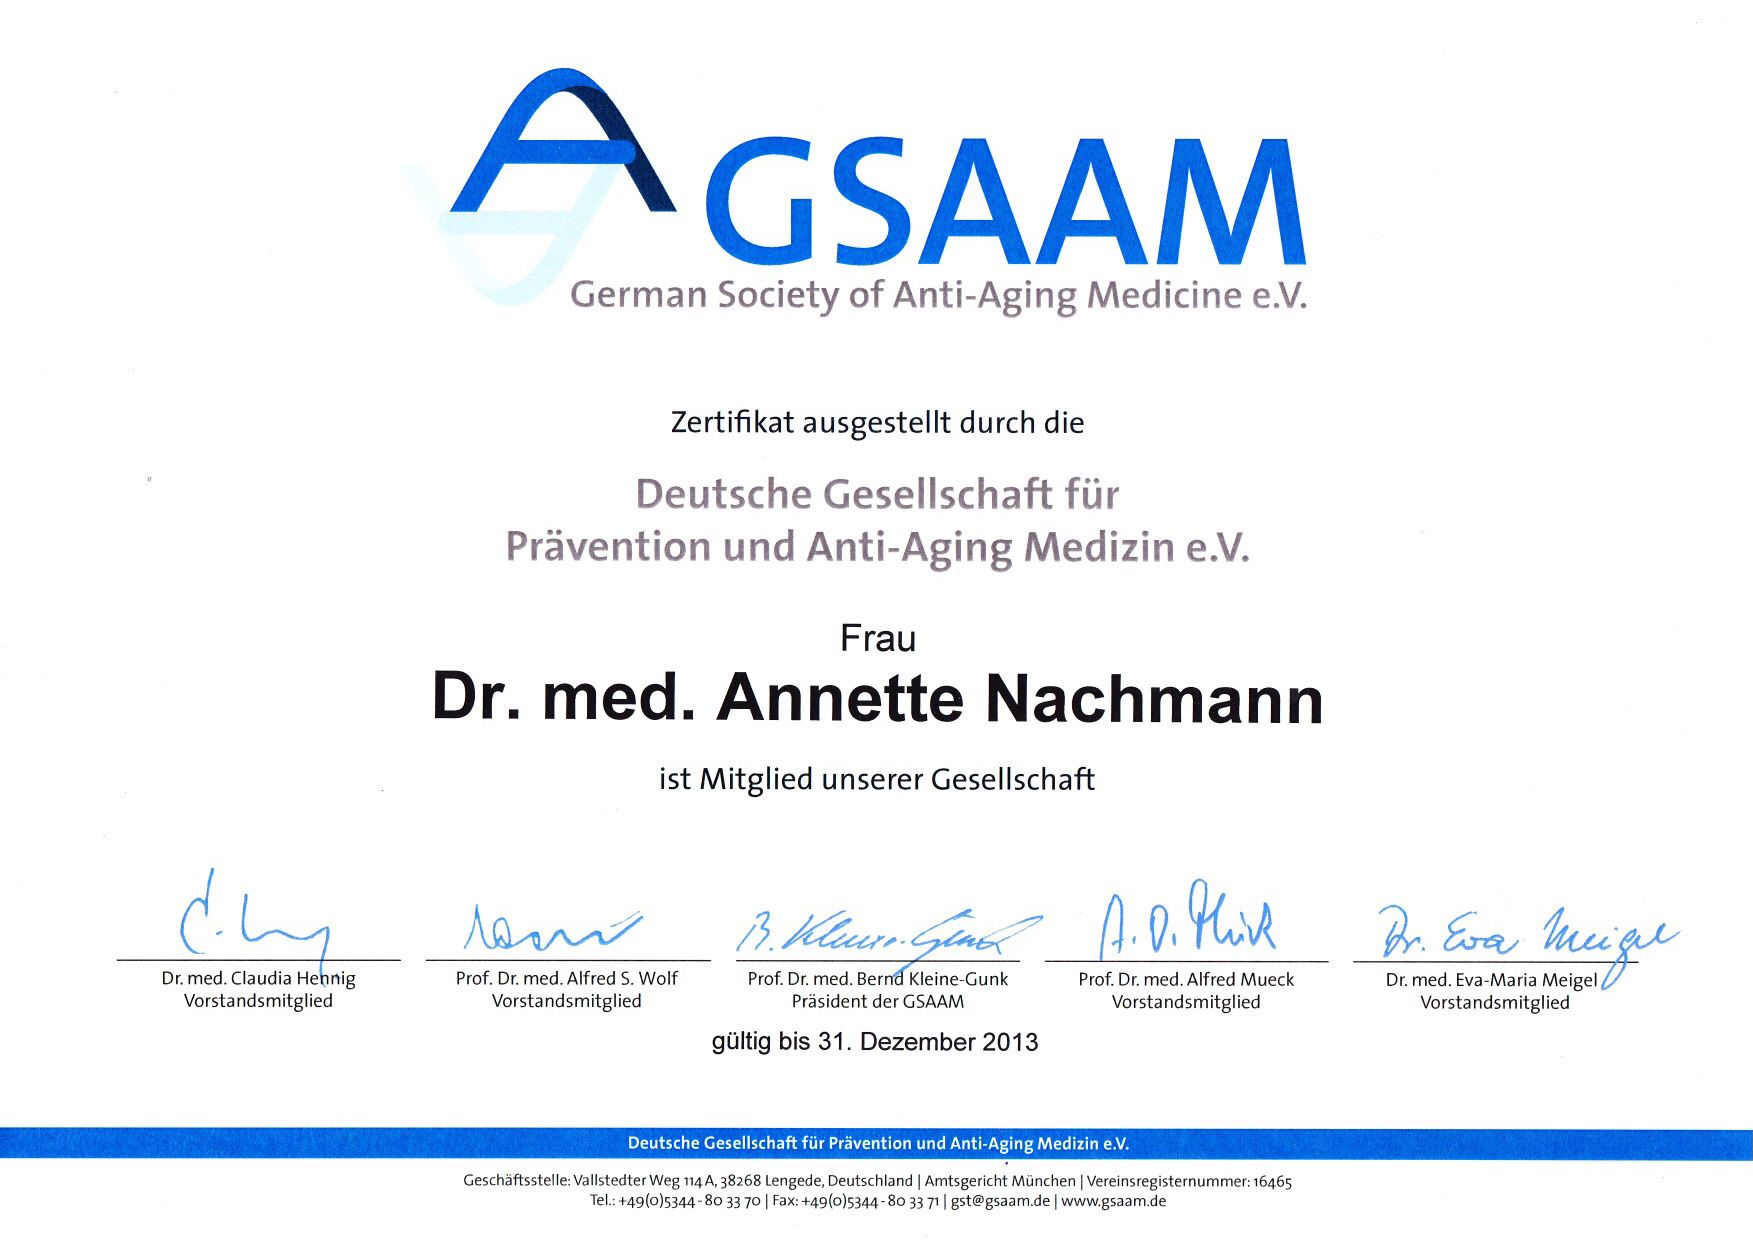 Zertifikat: German Society of Anti-Aging Medicine e.V. (GSAAM)